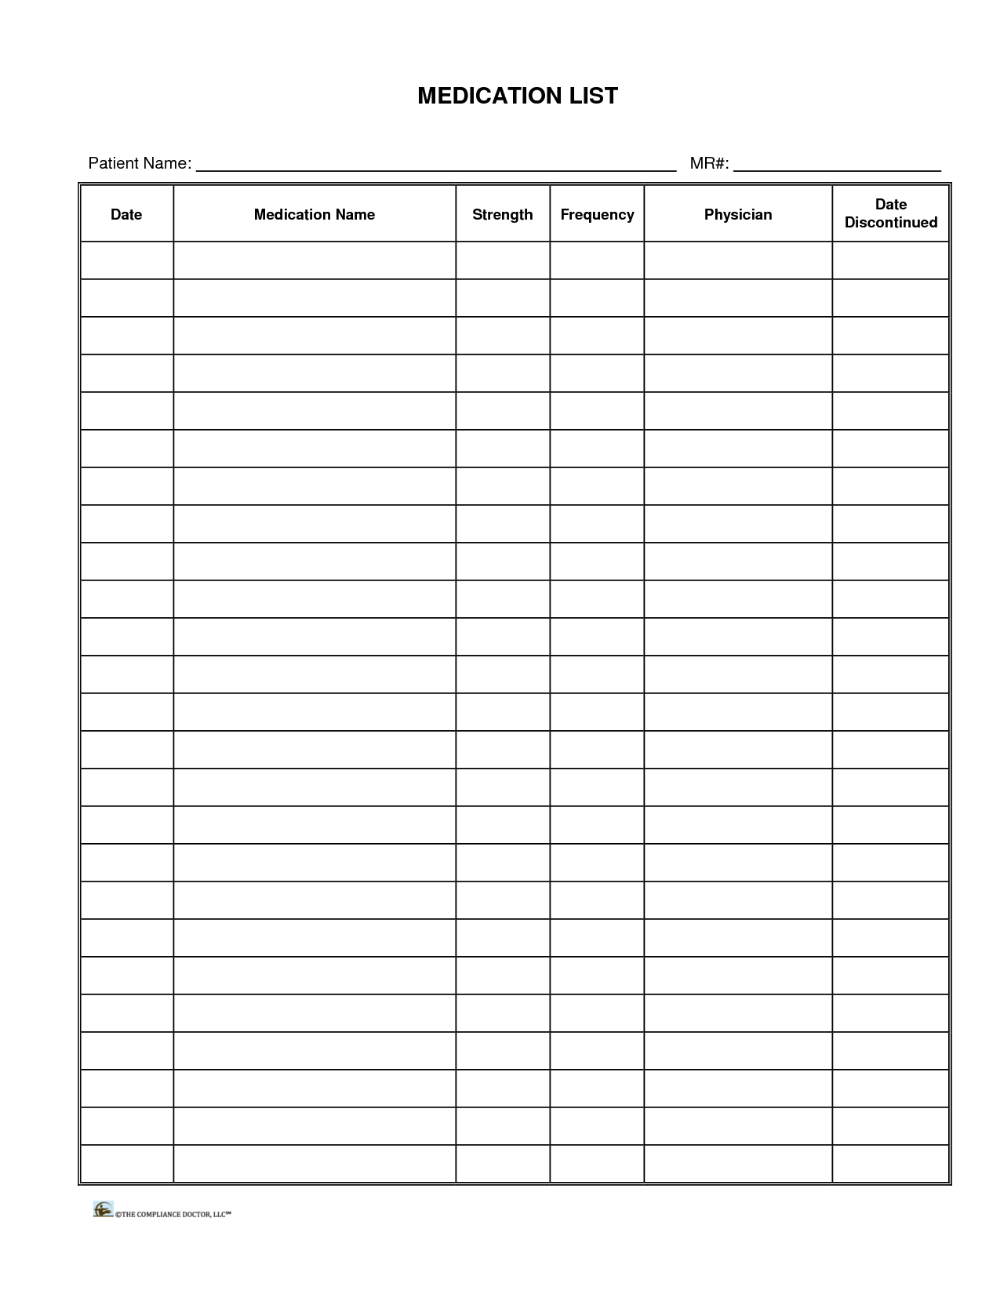 Patient Medication List Template | Medication List Regarding Blank Prescription Form Template